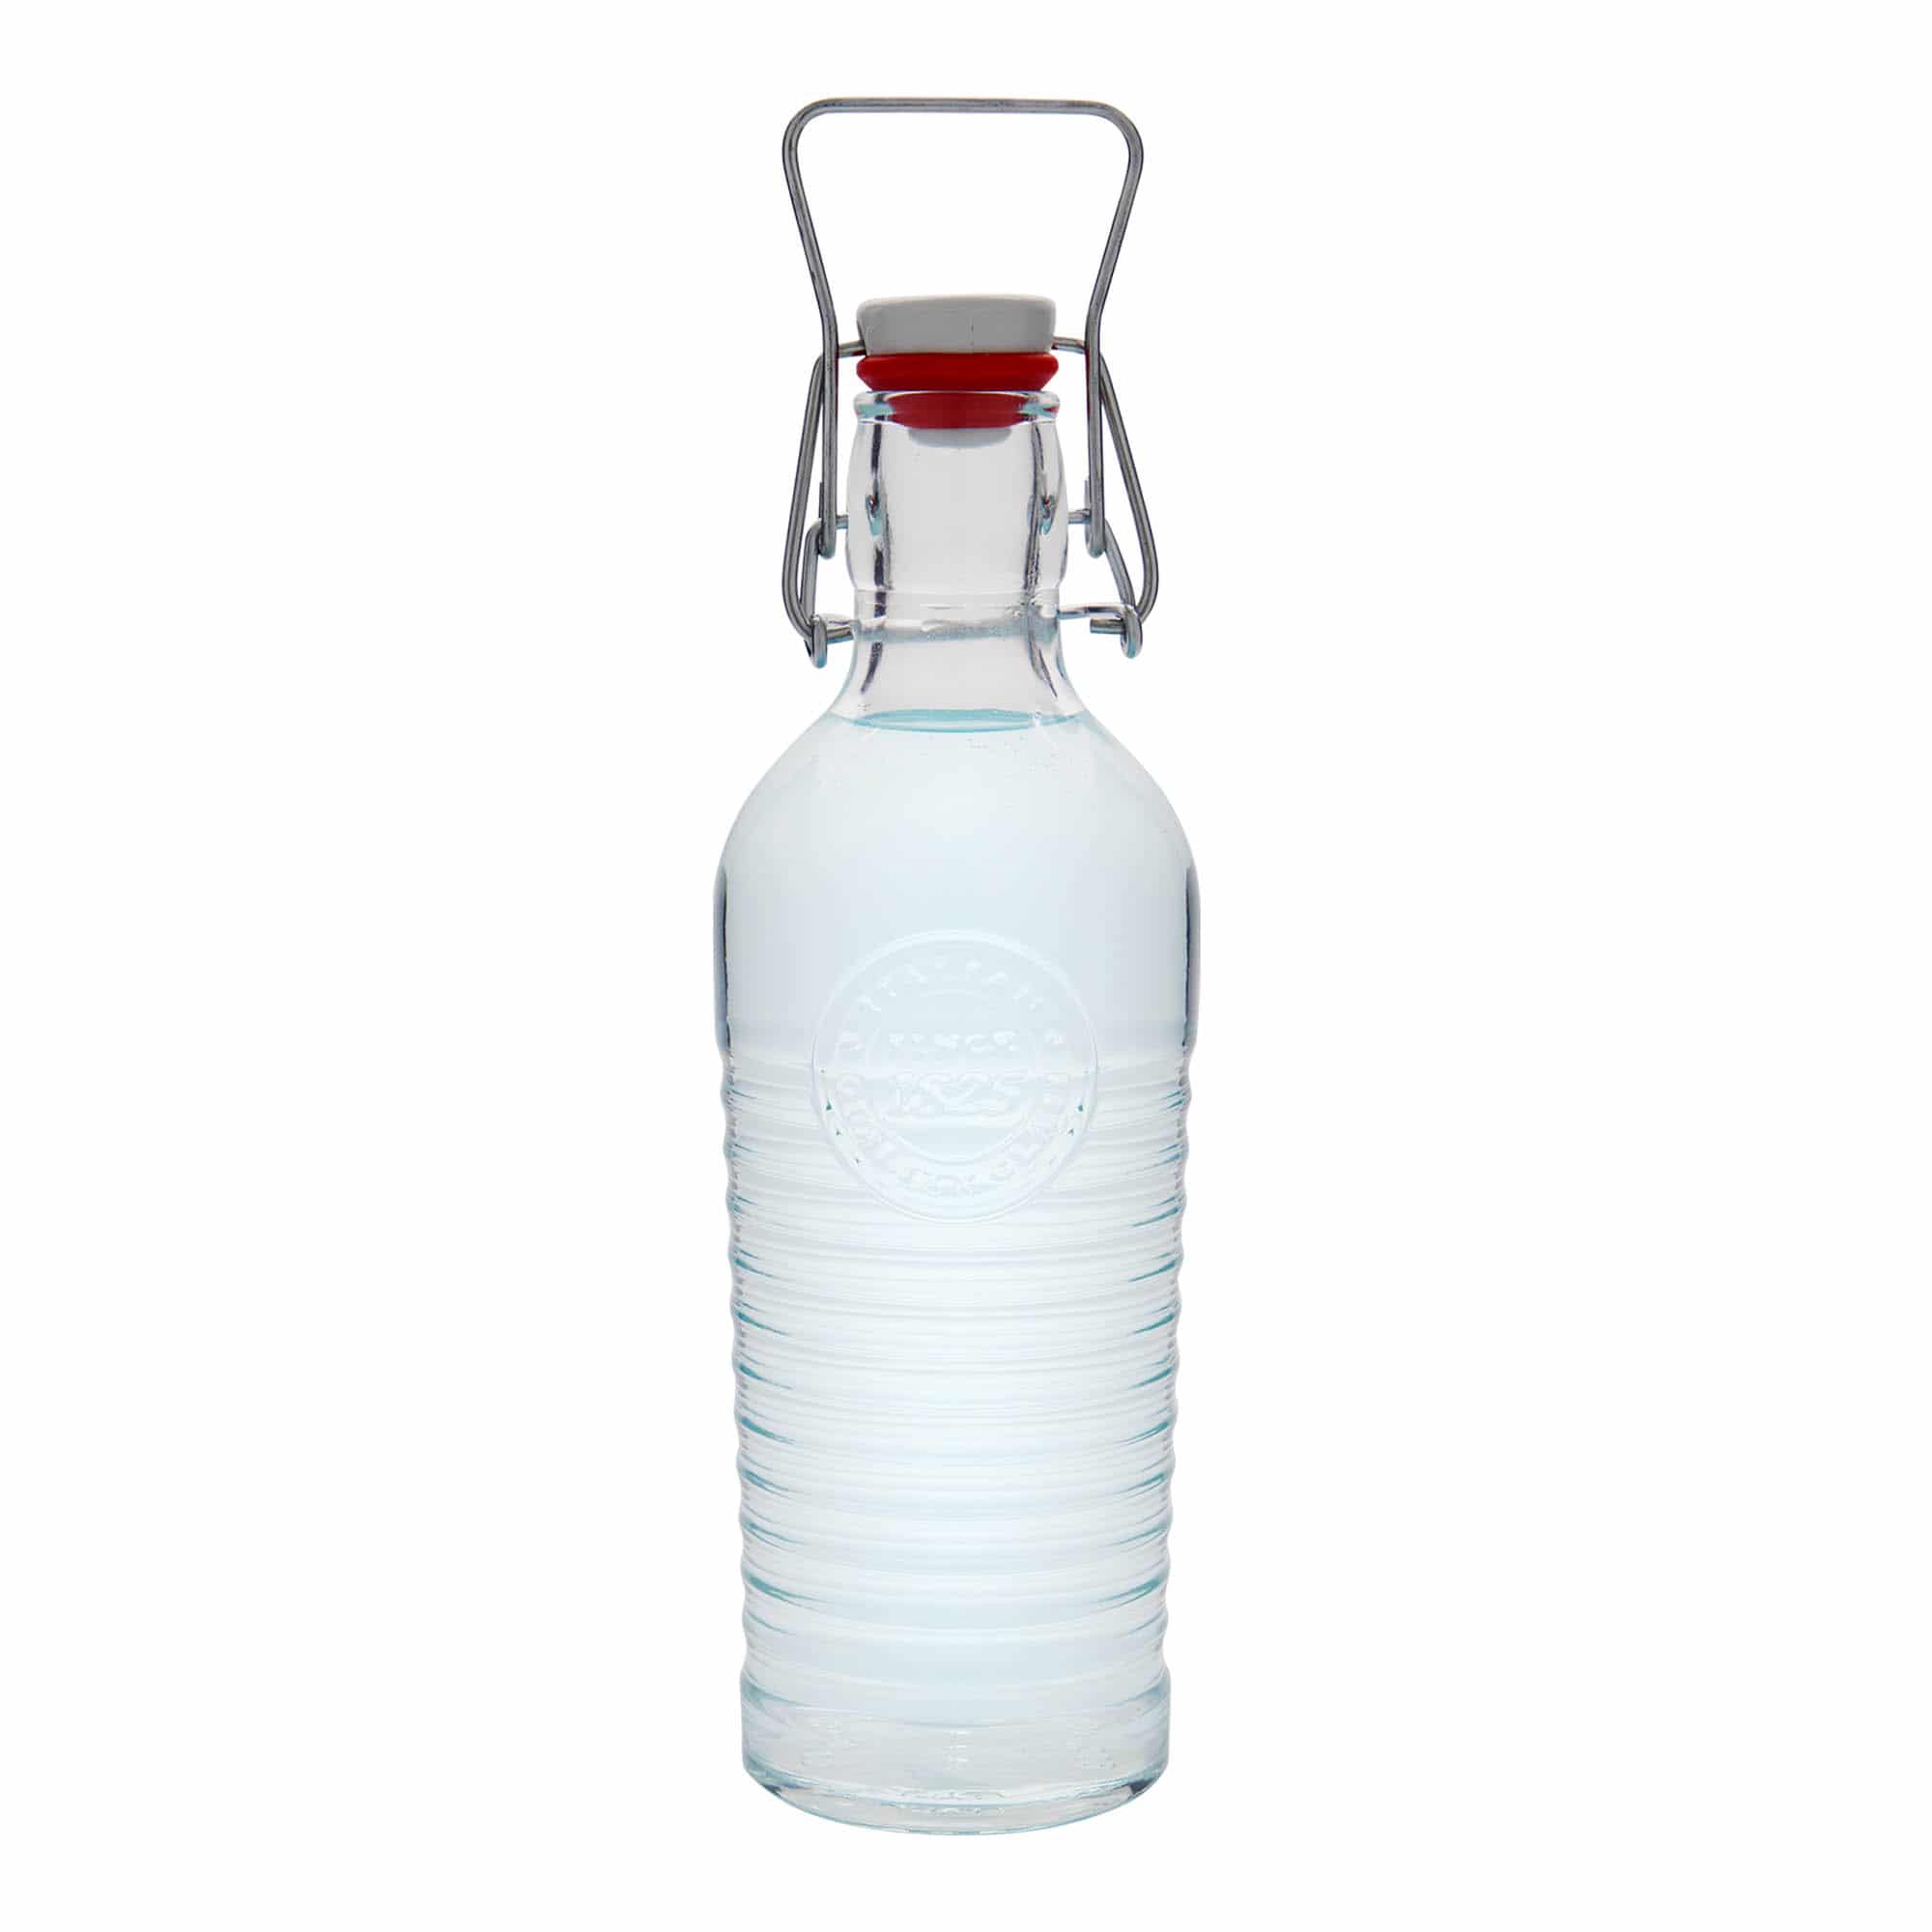 750 ml glass bottle 'Officina 1825', closure: swing top